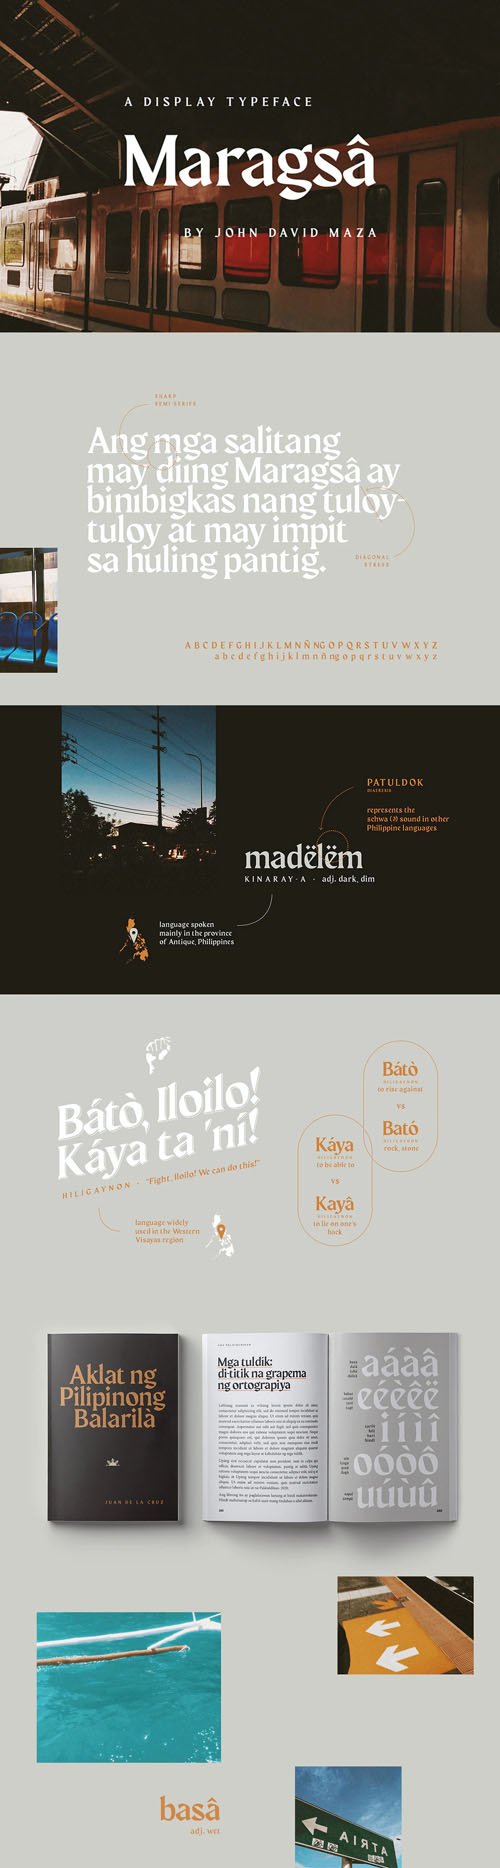 Maragsa - Display Typeface